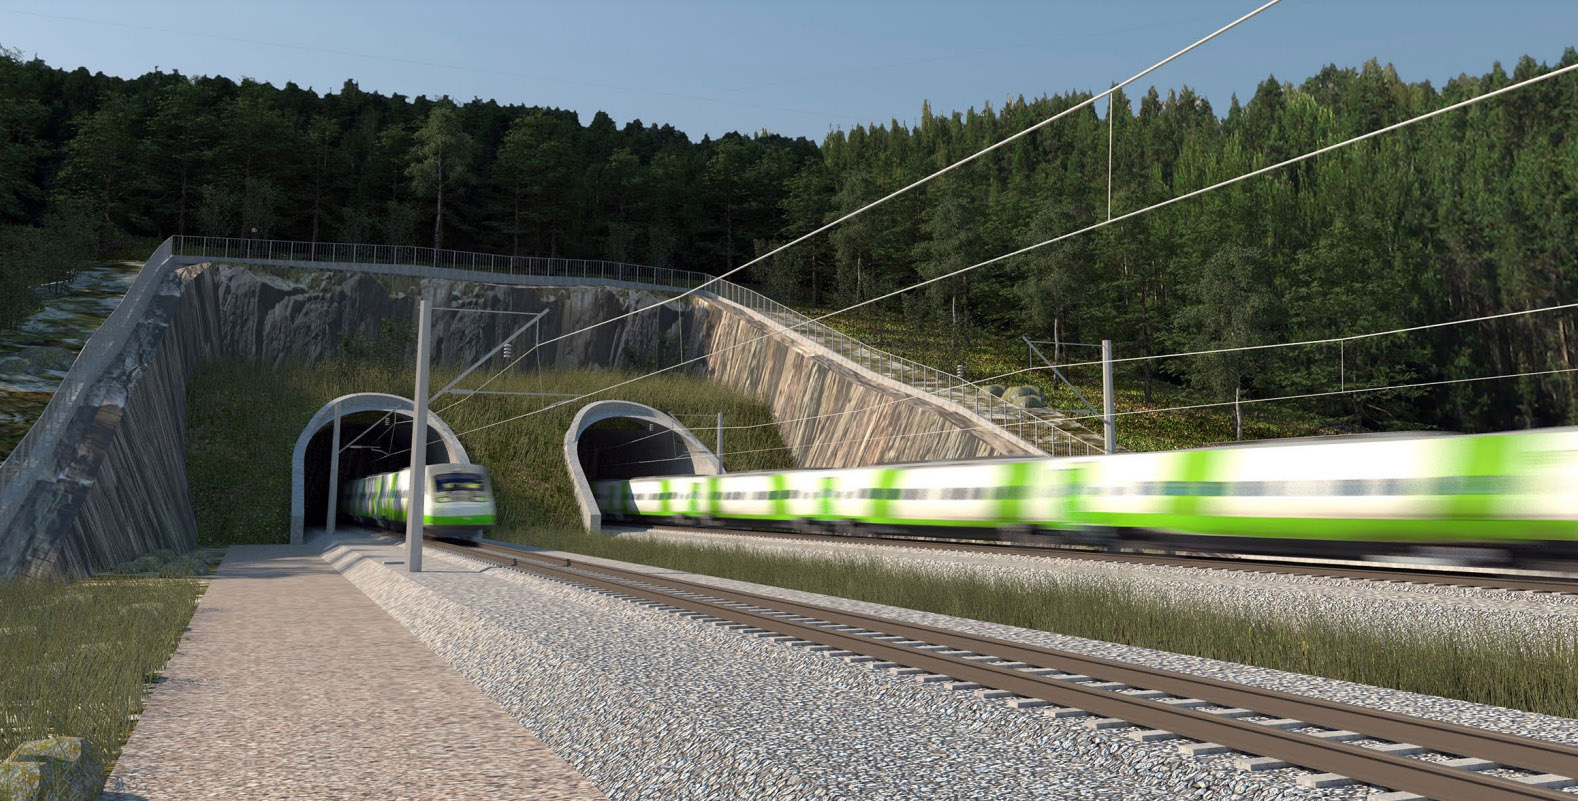 Concept picture of Espoo Salo railway line.